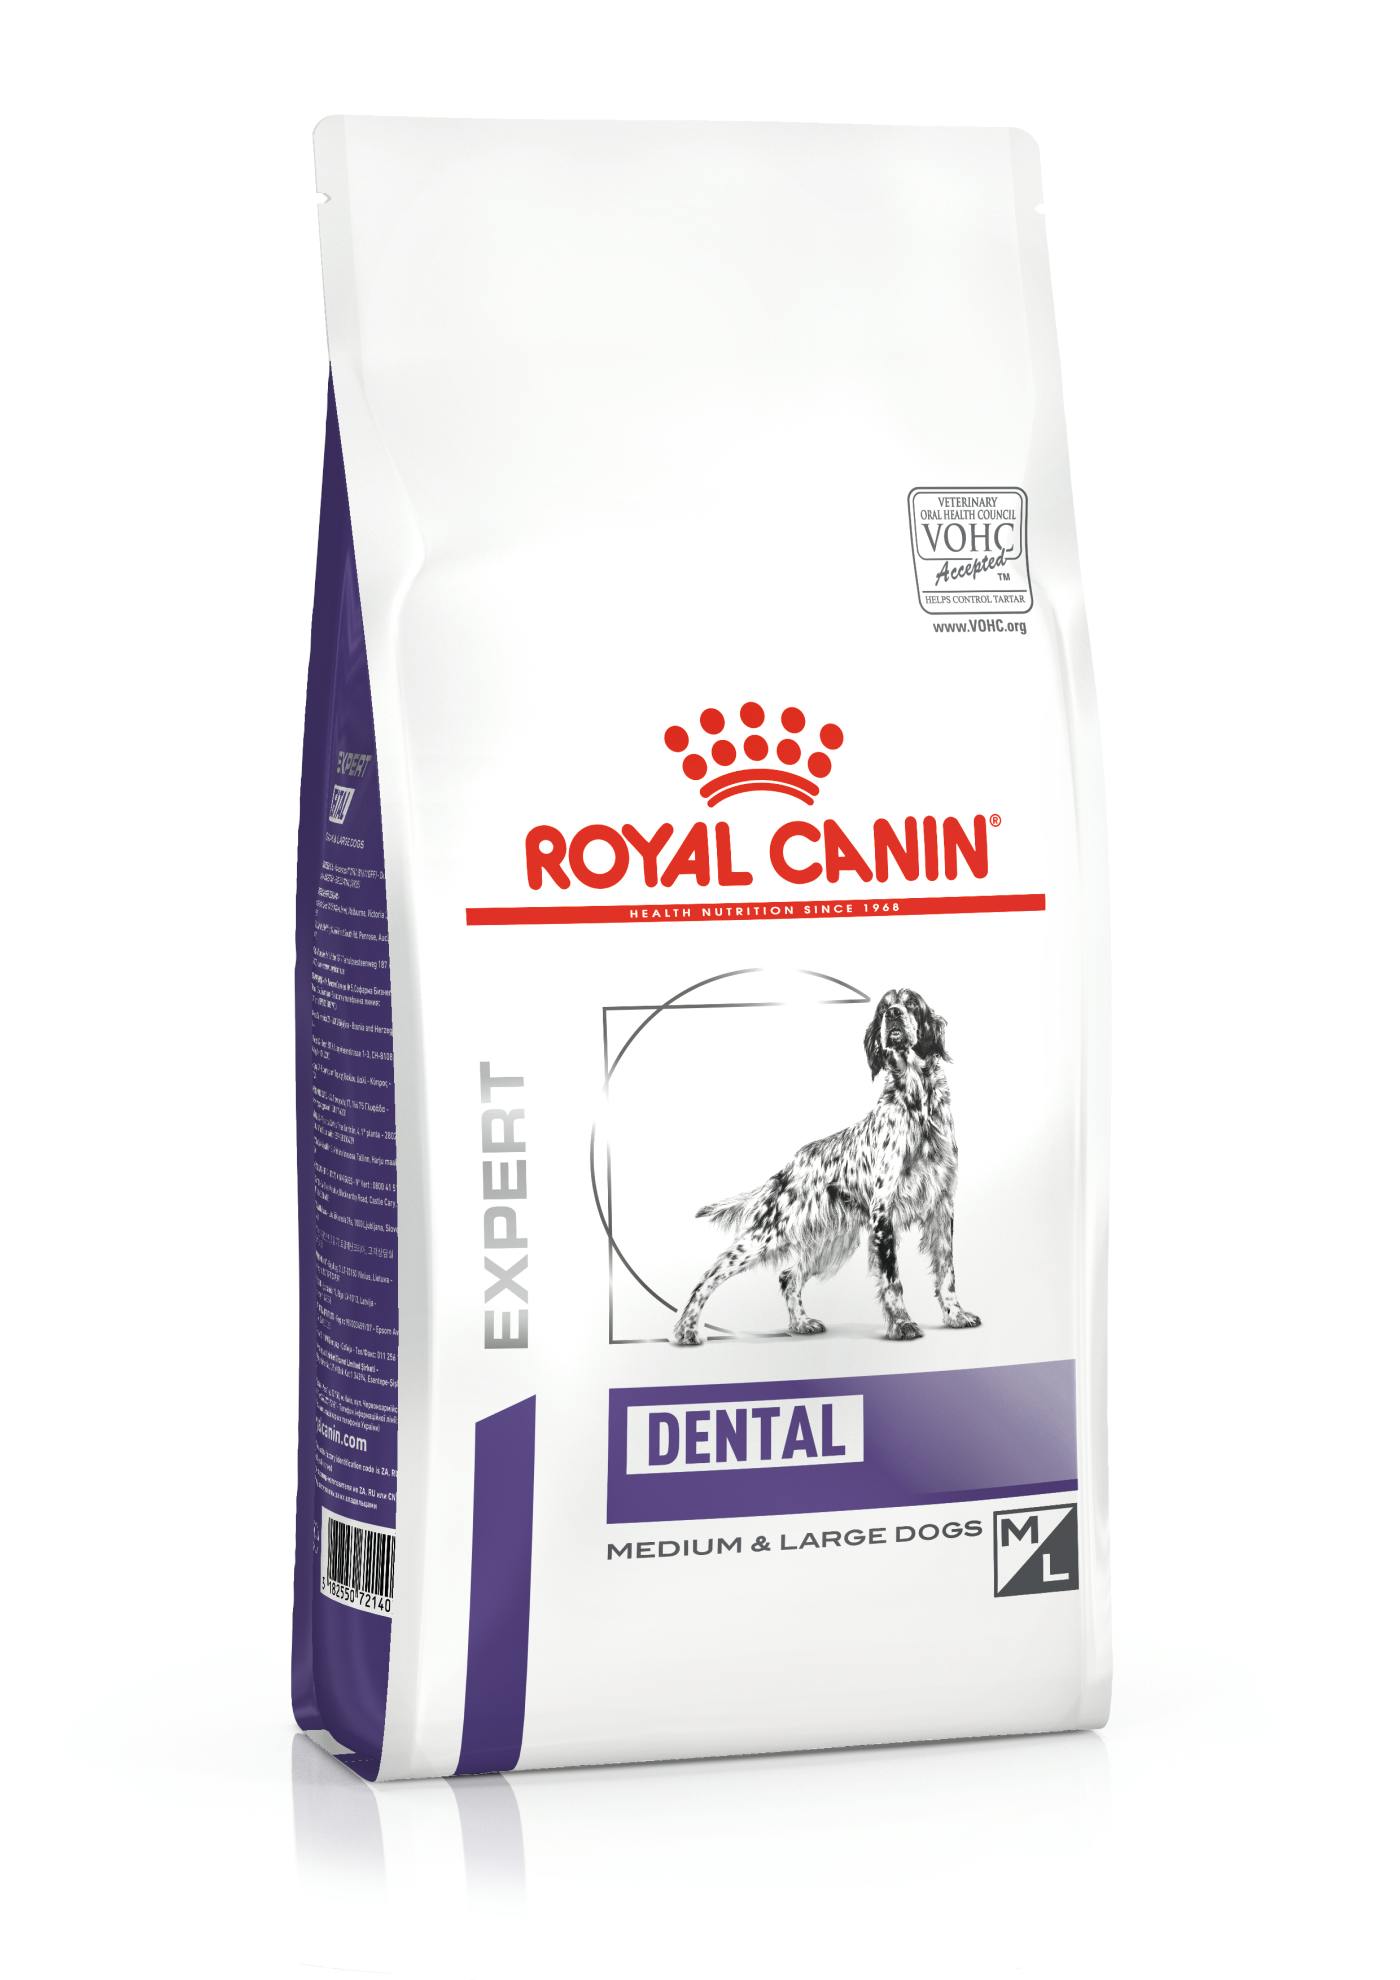 Rijk Verlichten Renaissance Dental dry | Royal Canin